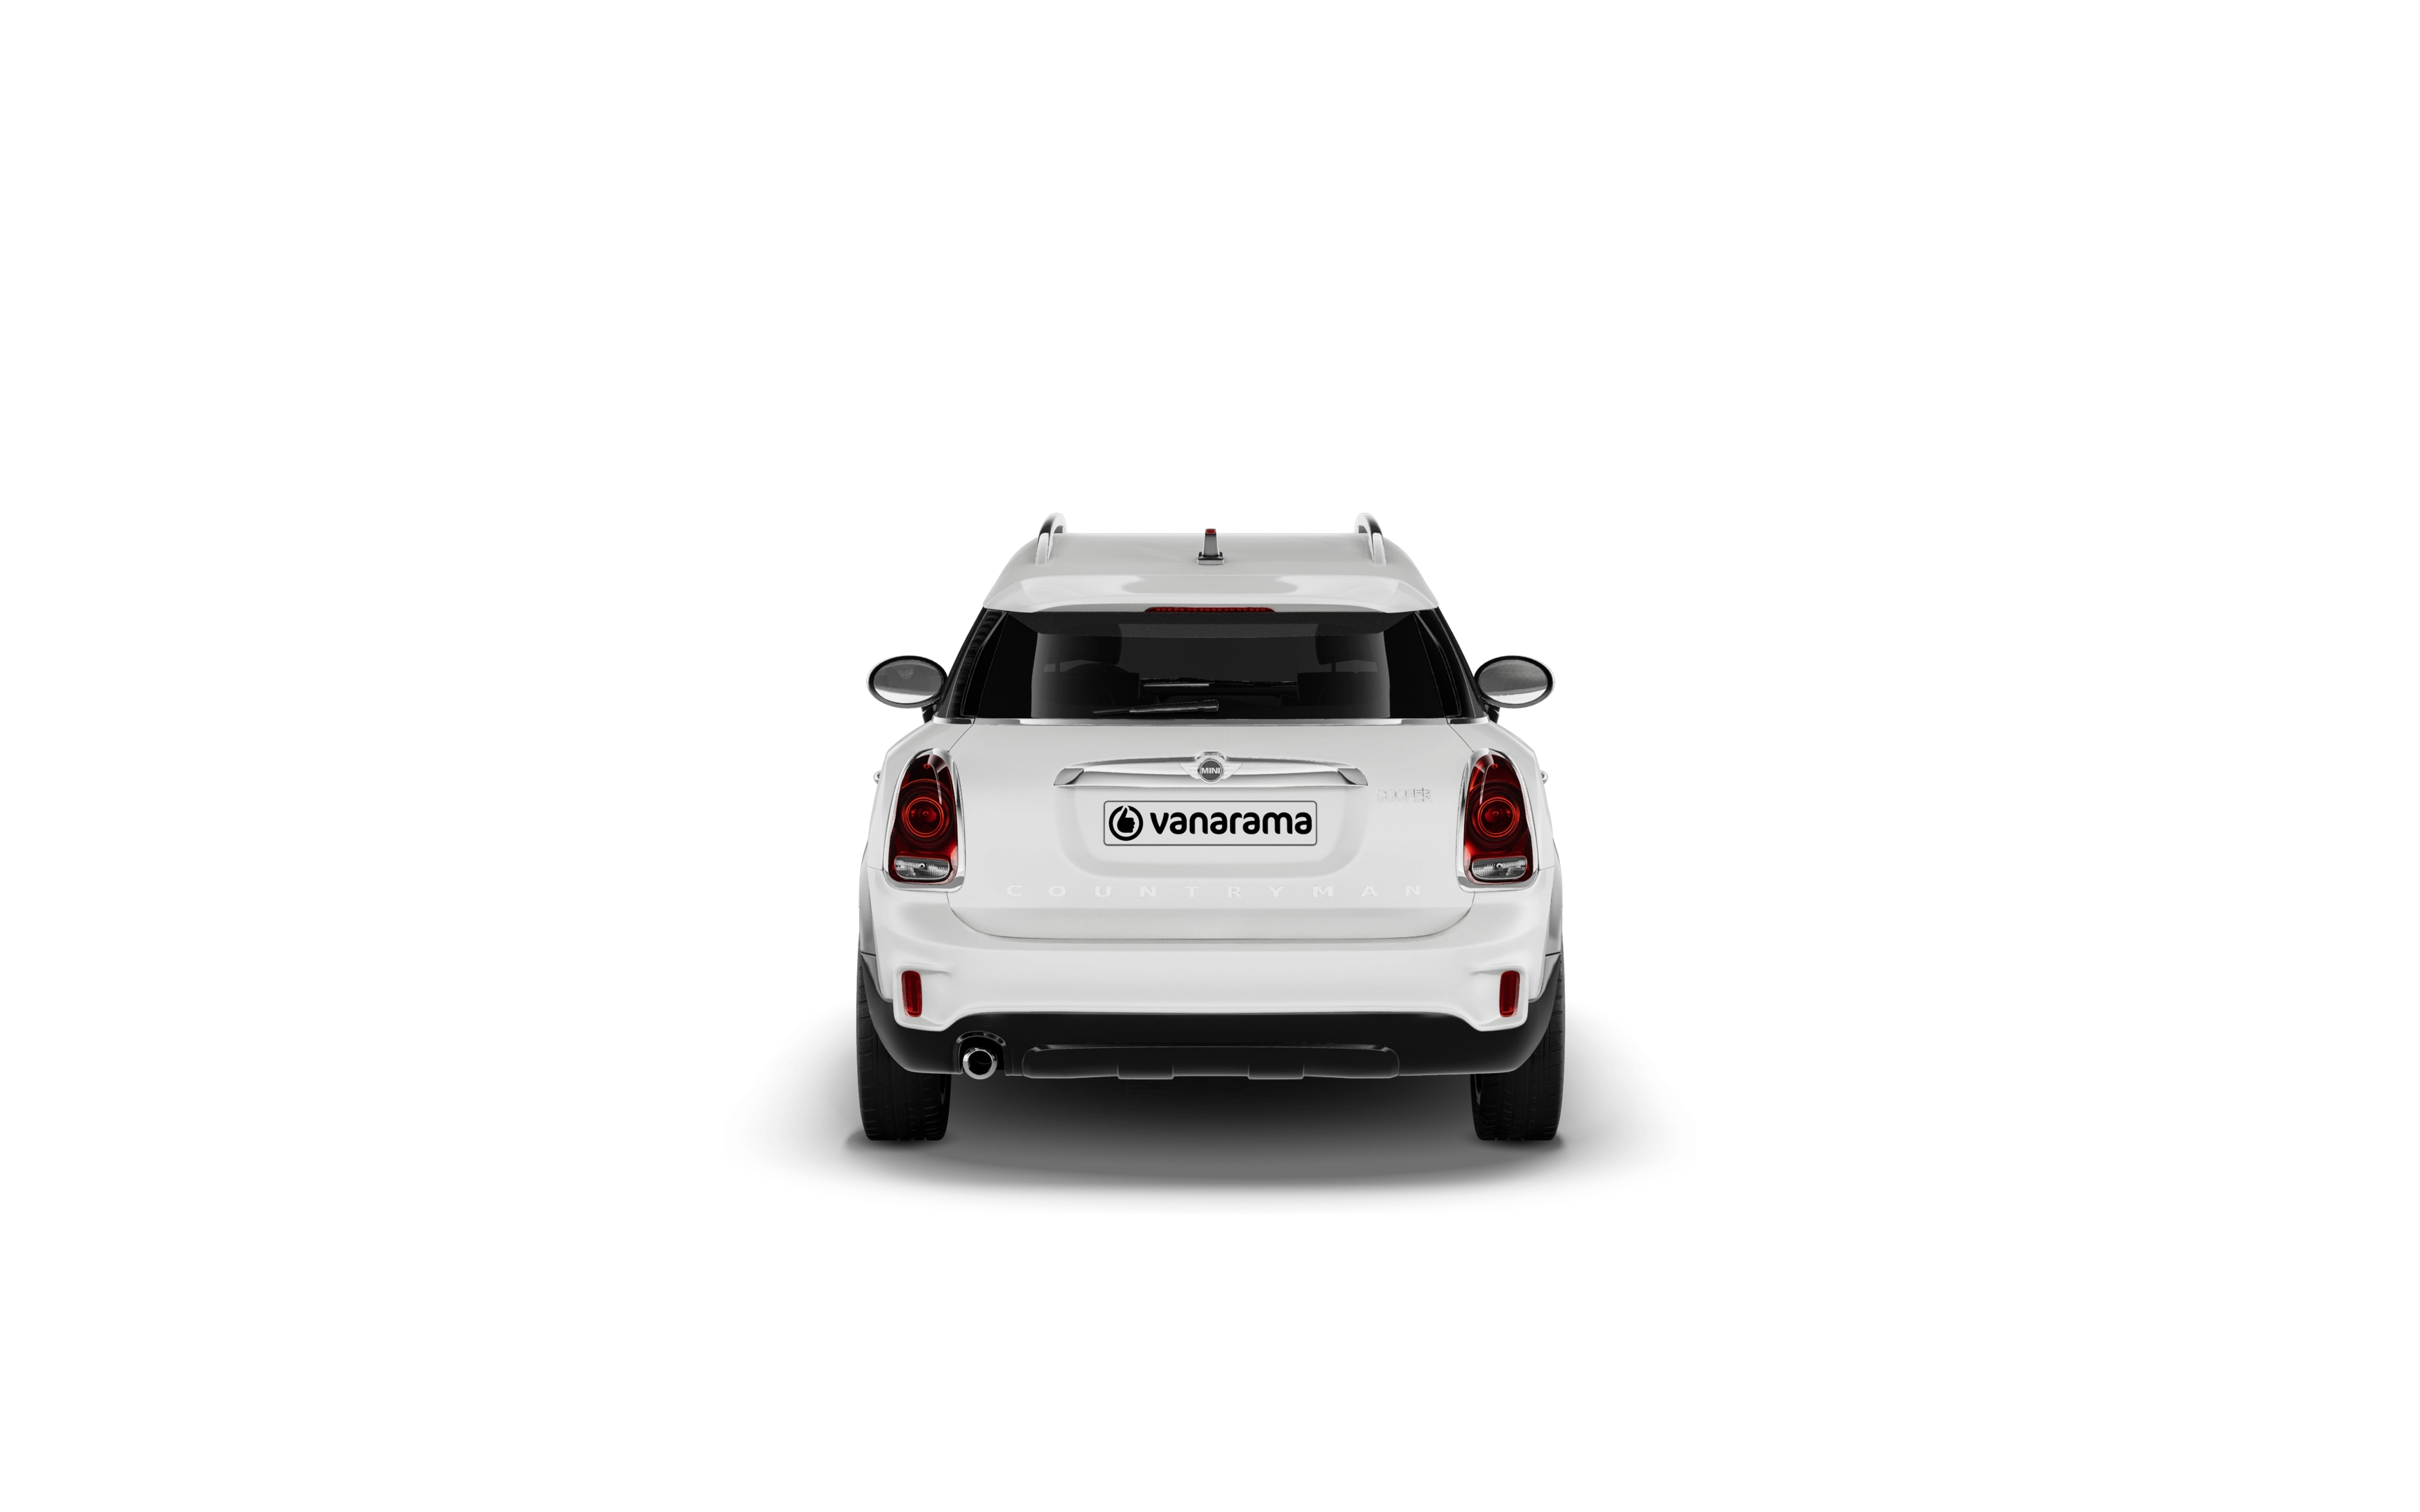 Mini countryman hatchback 1.5 cooper untamed edition premium 5 doors auto